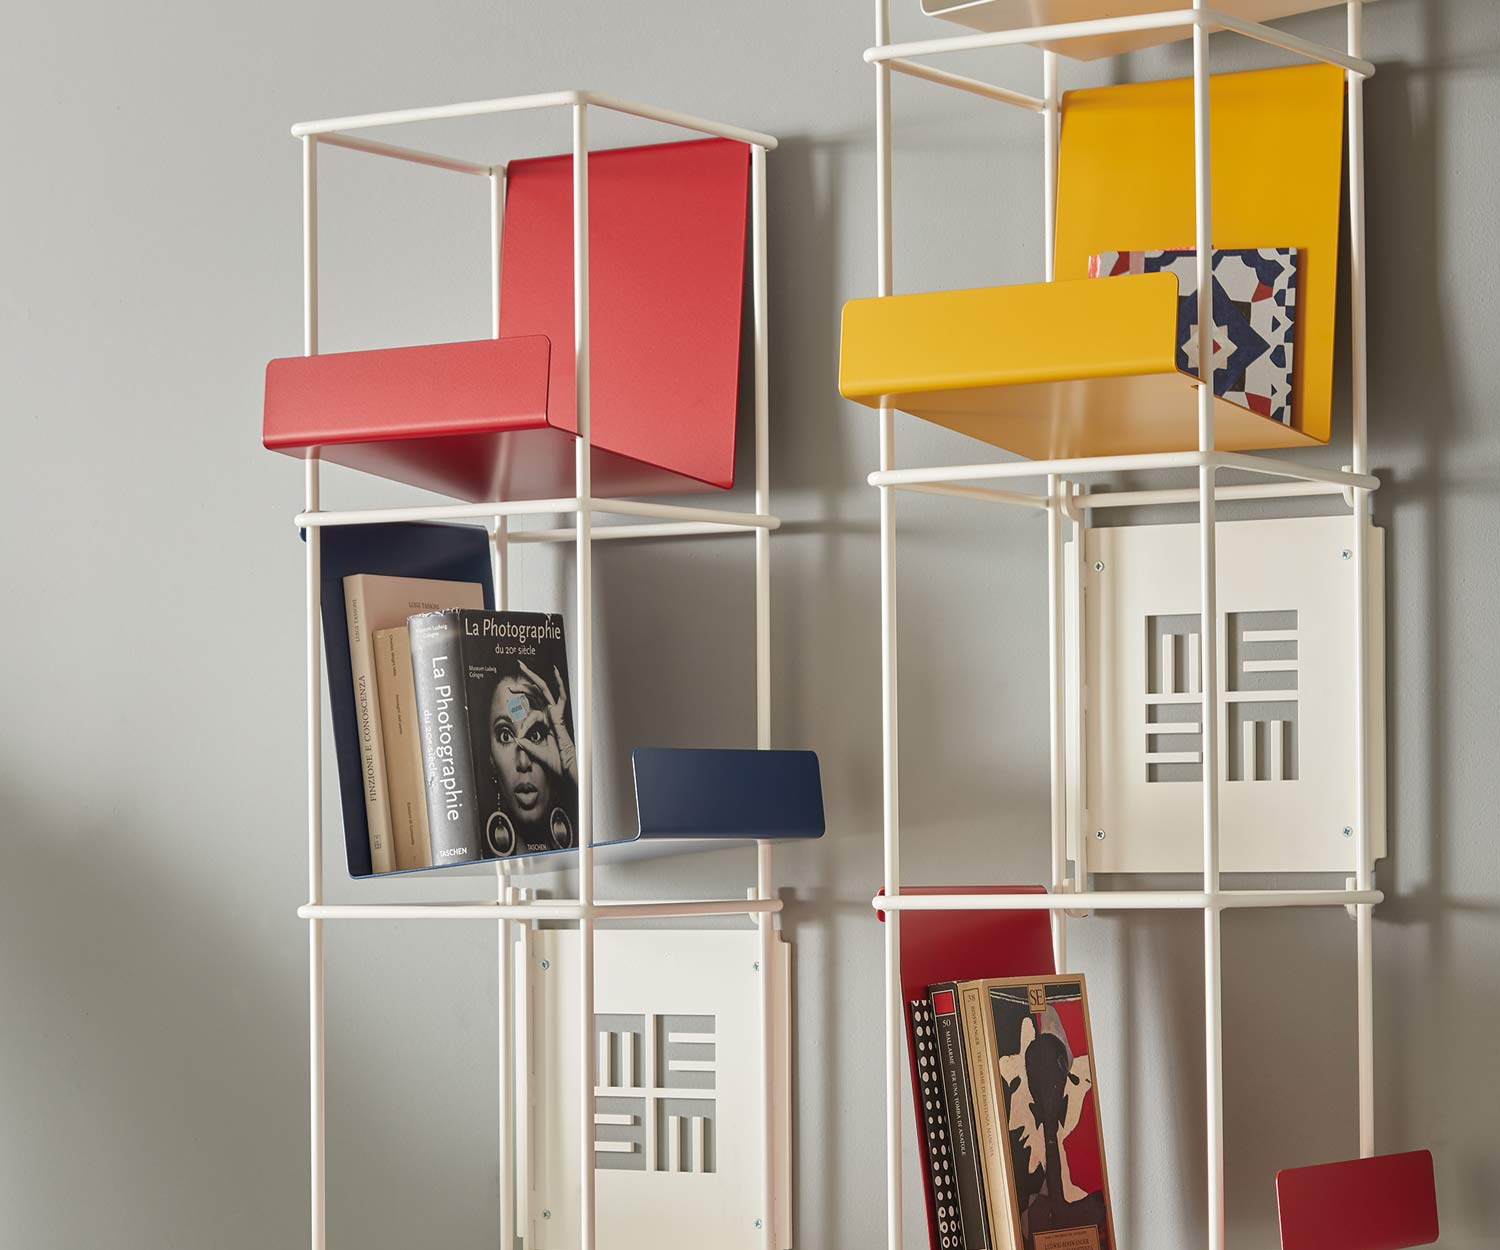 Modernes MEME Libro Design vertikales Wand Bücherregal